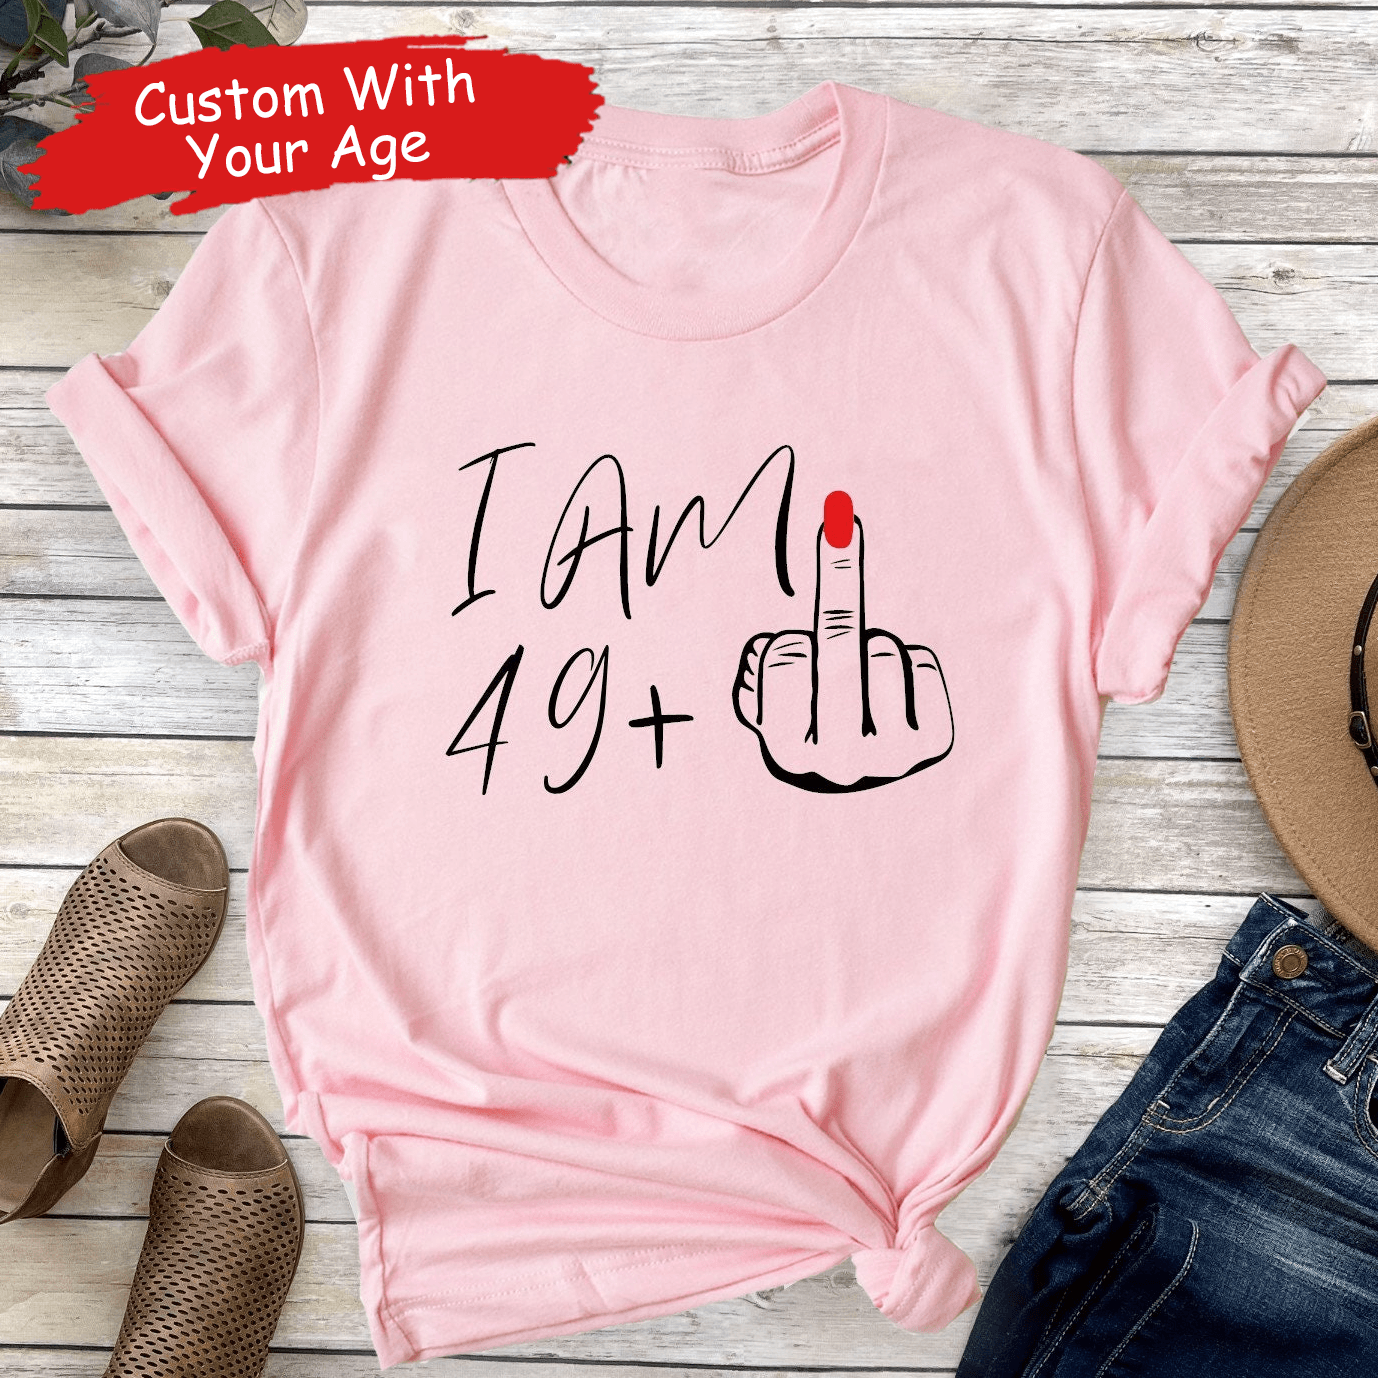 I Am Plus Birthday Gift - Personalized Custom T Shirt - Birthday, Loving, Funny Gift for Her, Wife, Mom, Mother, Grandma - Suzitee Store